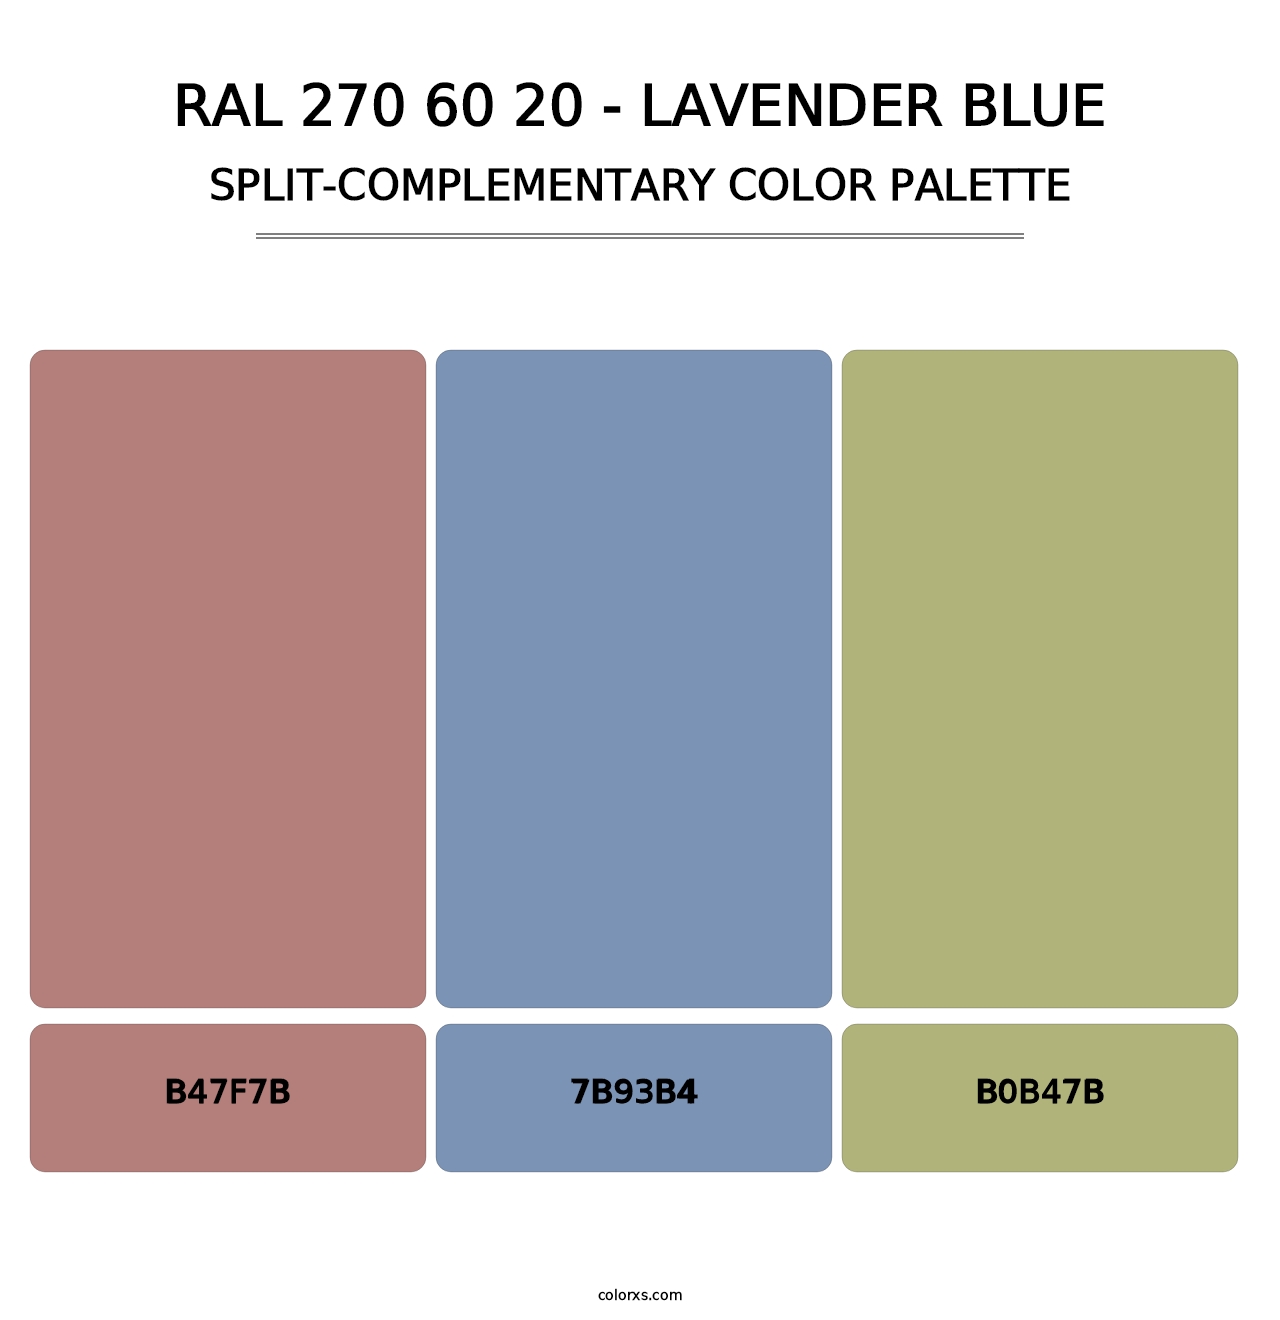 RAL 270 60 20 - Lavender Blue - Split-Complementary Color Palette